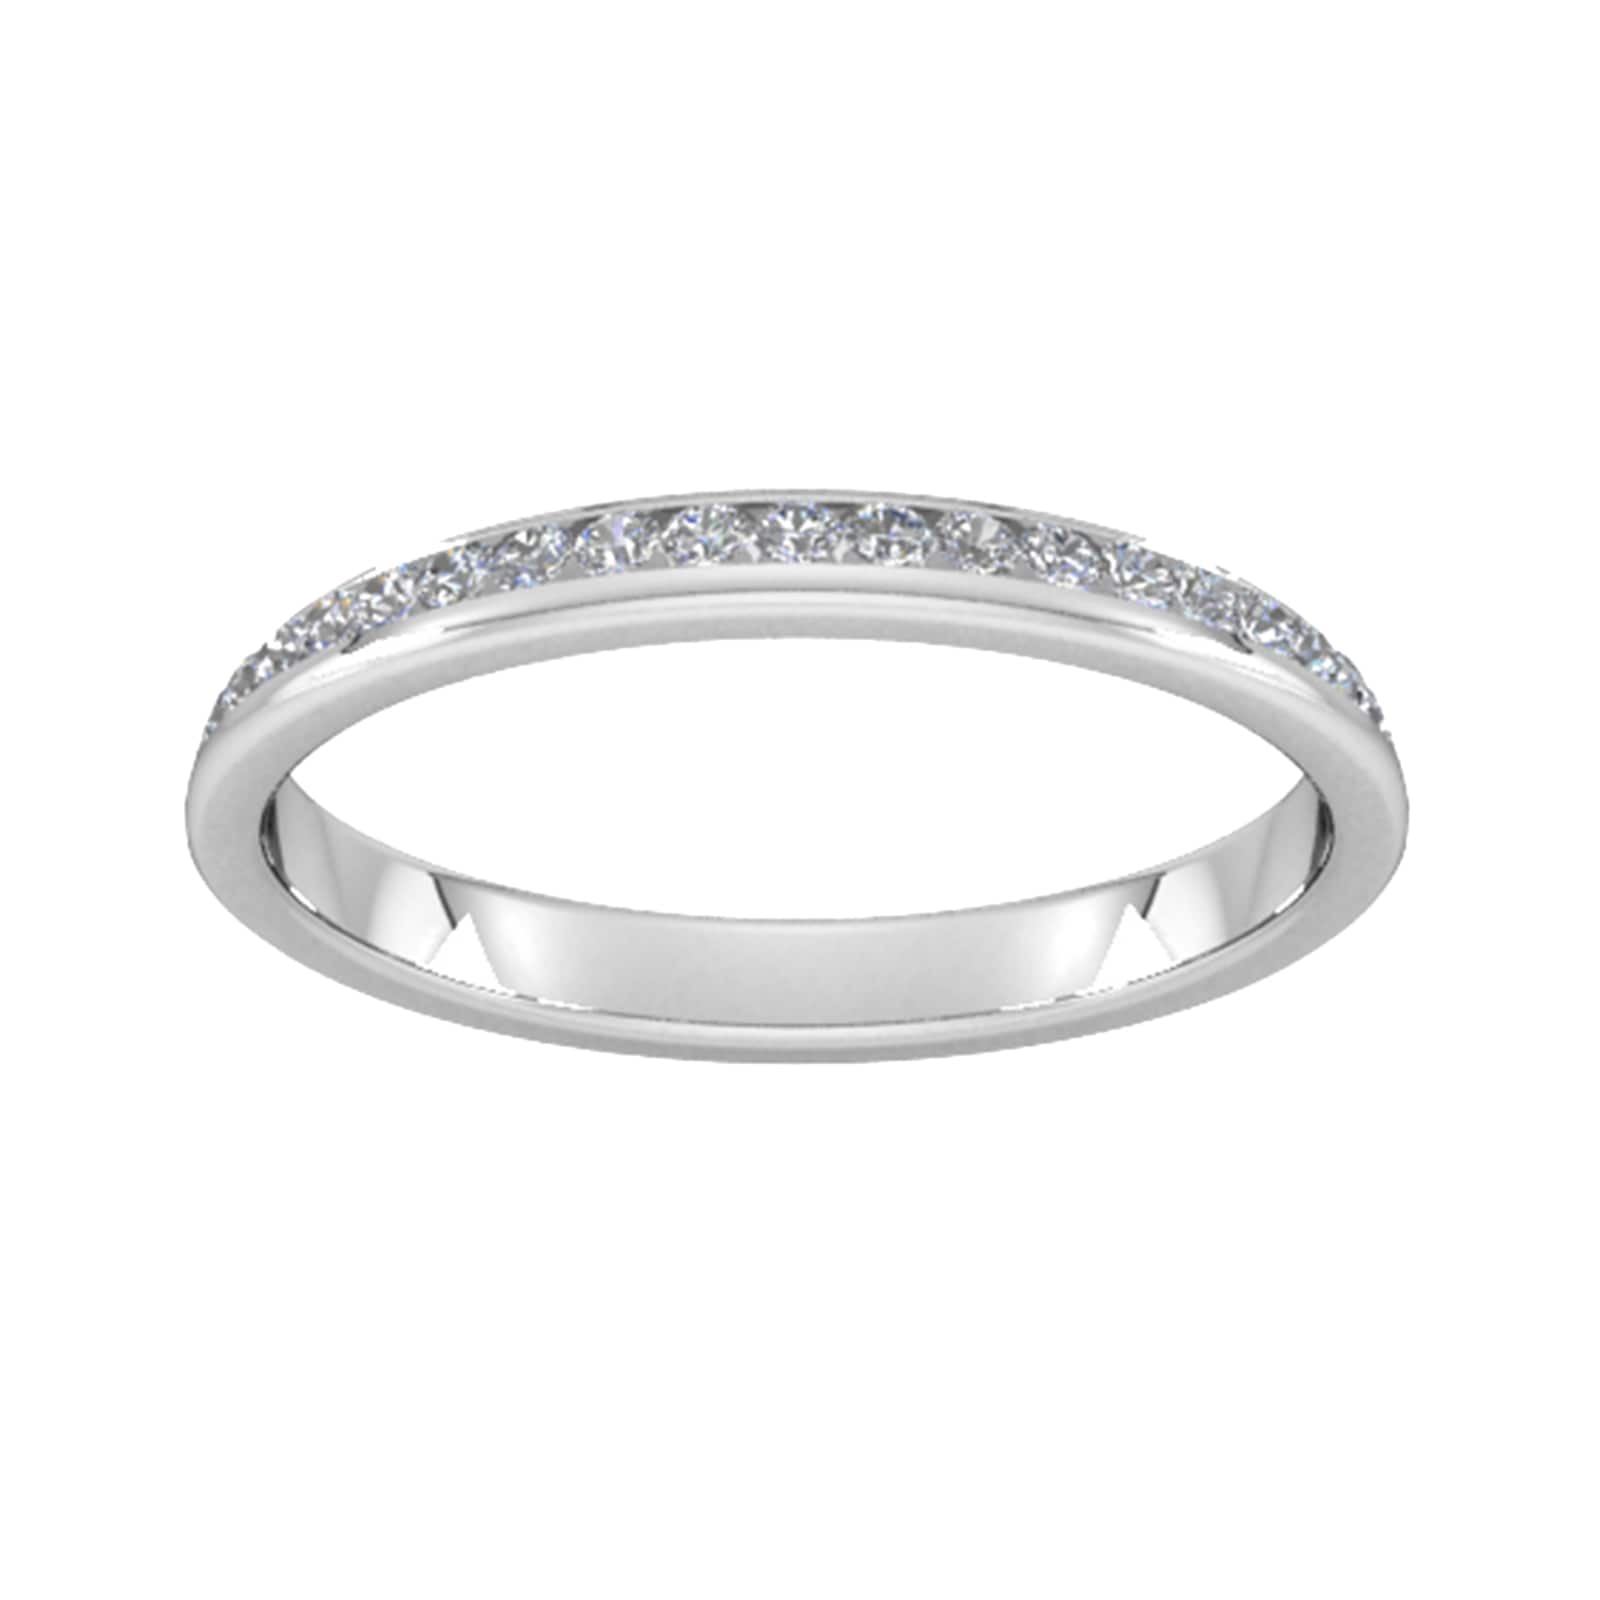 0.42 Carat Total Weight Brilliant Cut Full Diamond Set Pyramid Style Wedding Ring In Platinum - Ring Size P